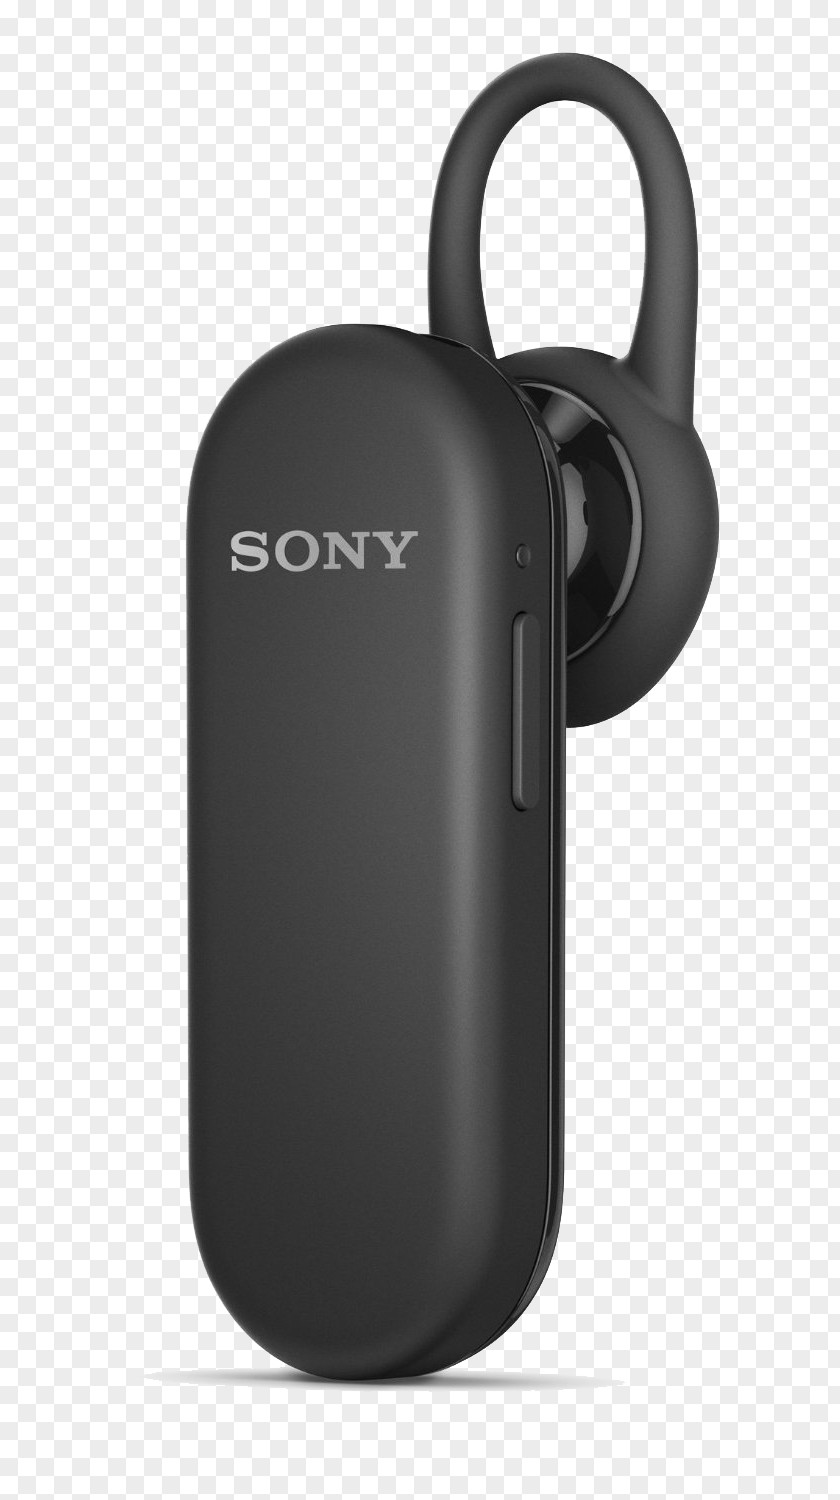 Sony Bluetooth Headset Headphones Microphone Wireless PNG